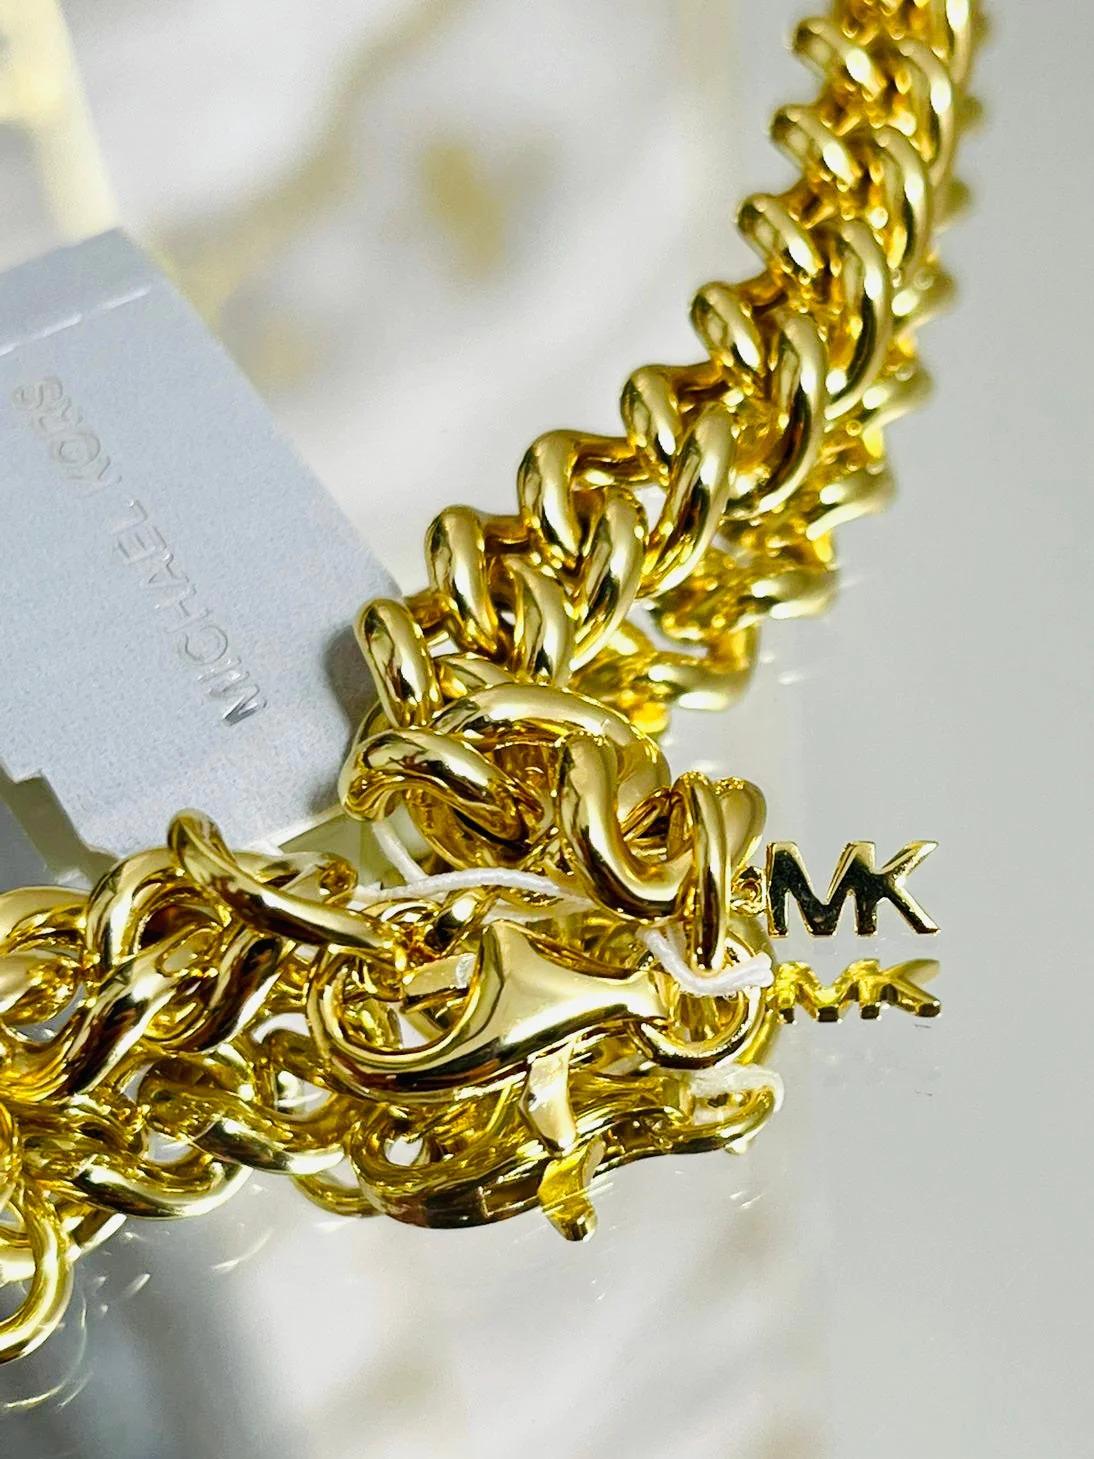 Michael Kors Pearl Fashion Earrings for sale | eBay